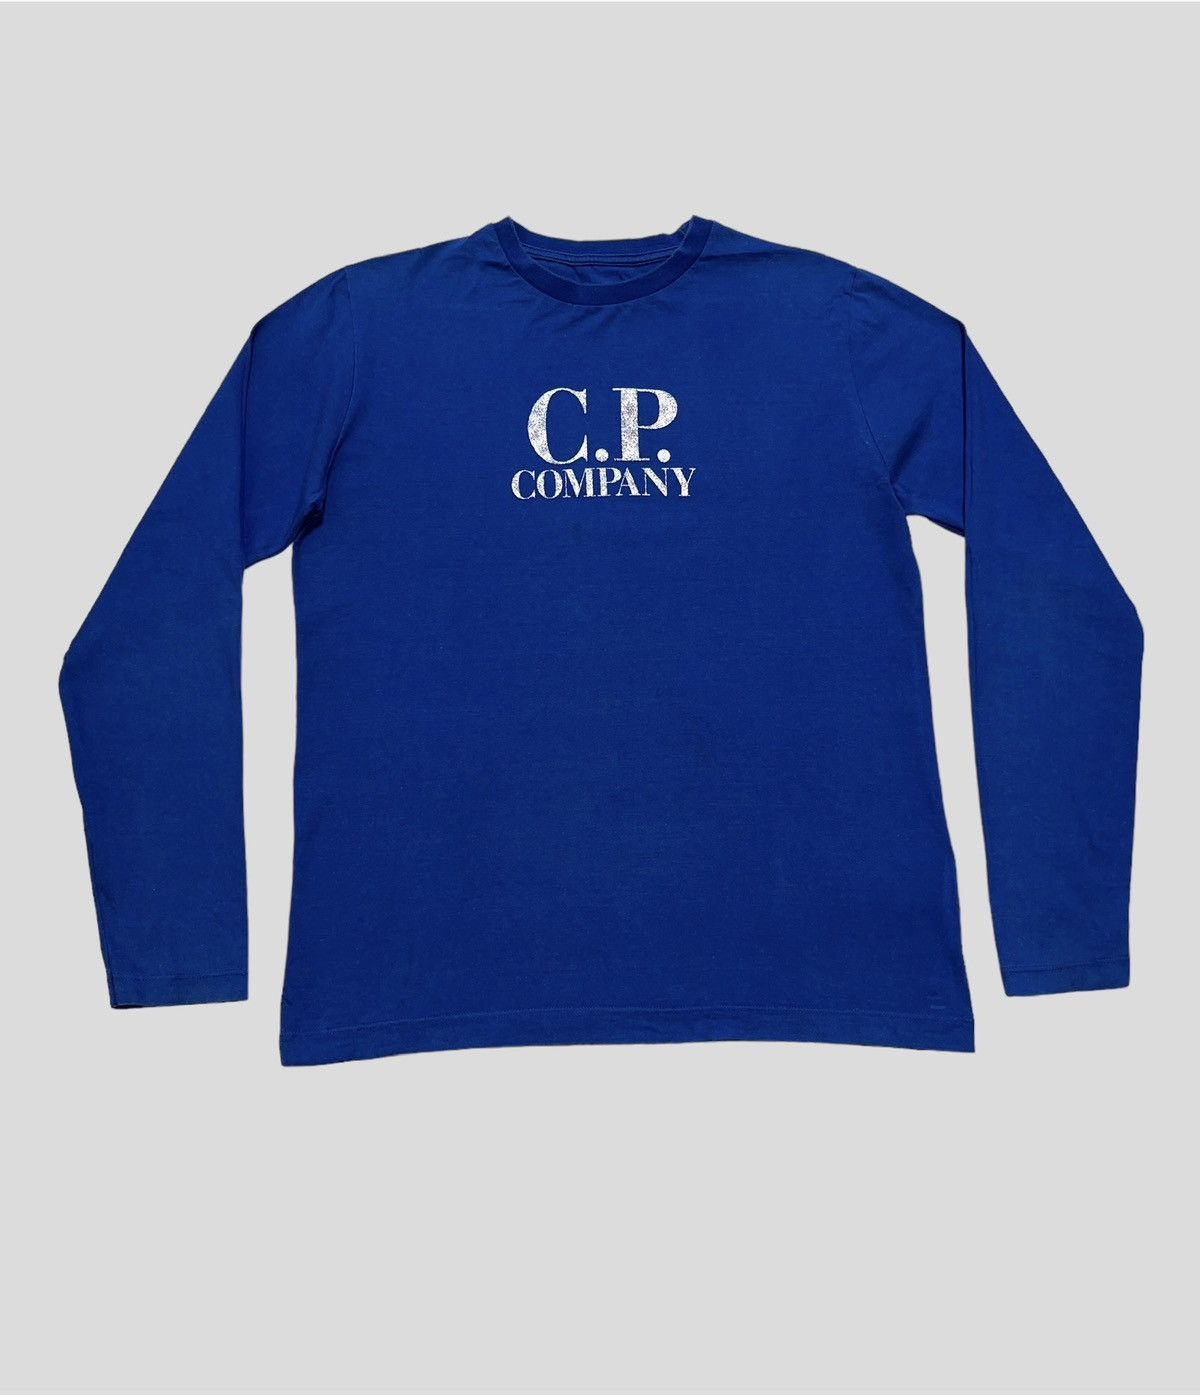 C.P. COMPANY - Logo Long Sleeve Shirt